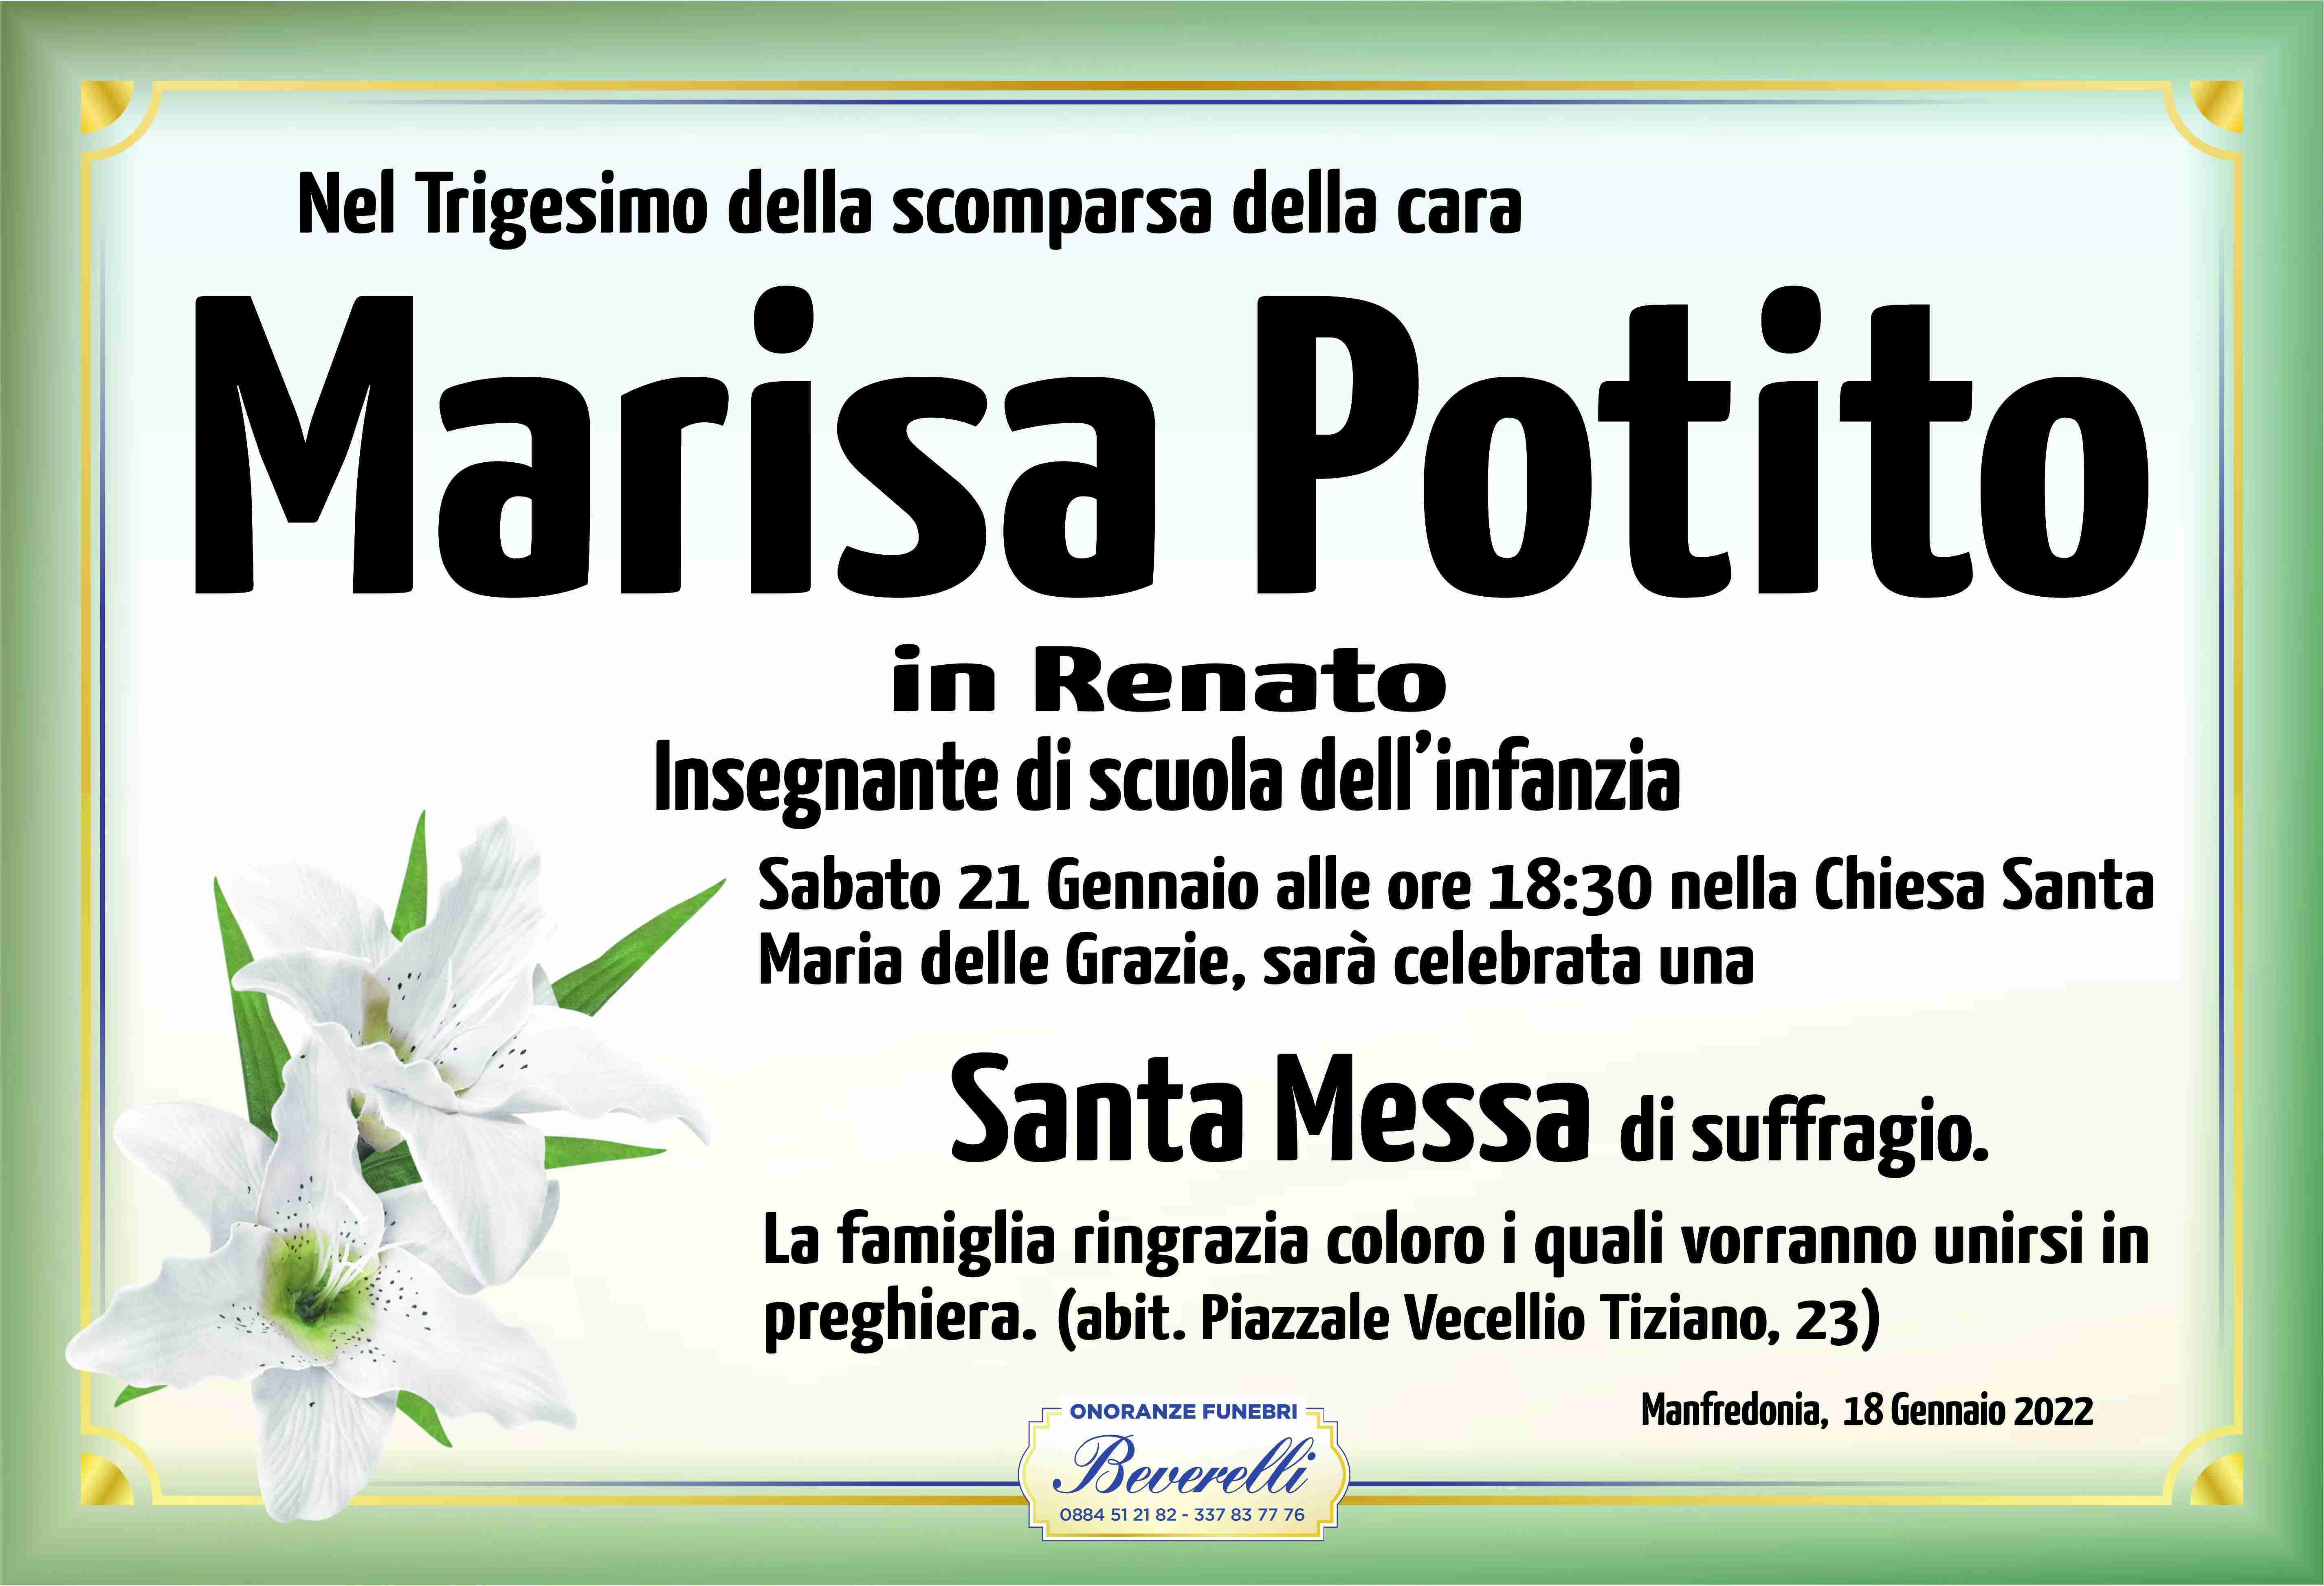 Maria Tersa Potito